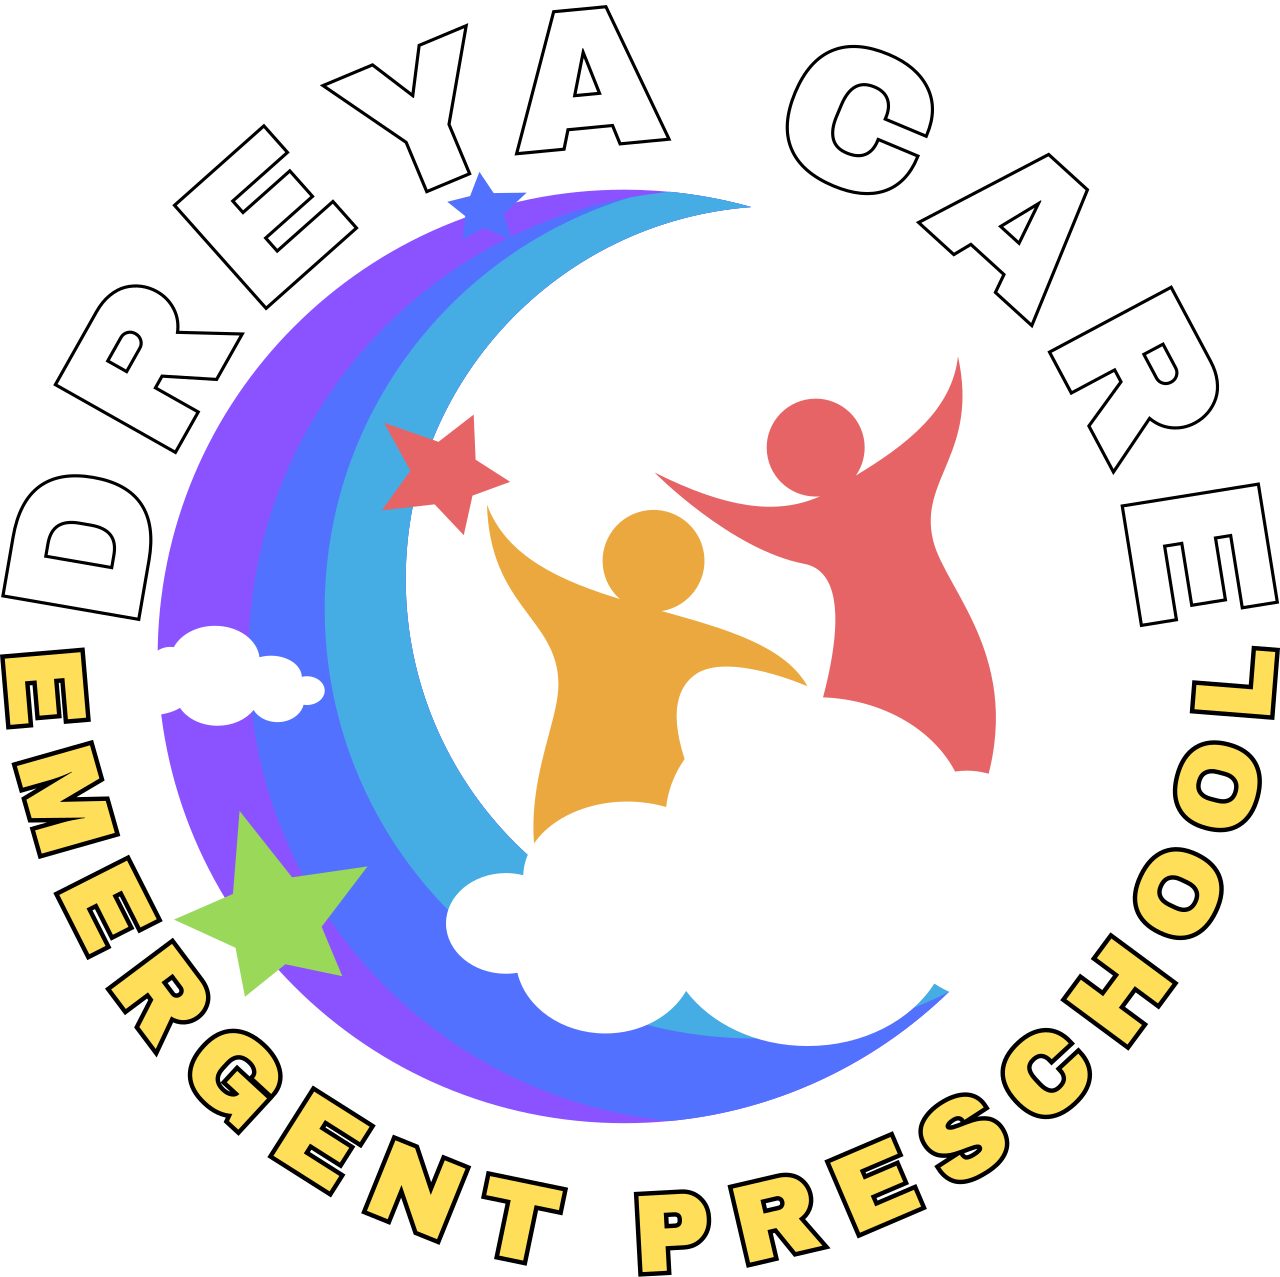 DREYA CARE's logo